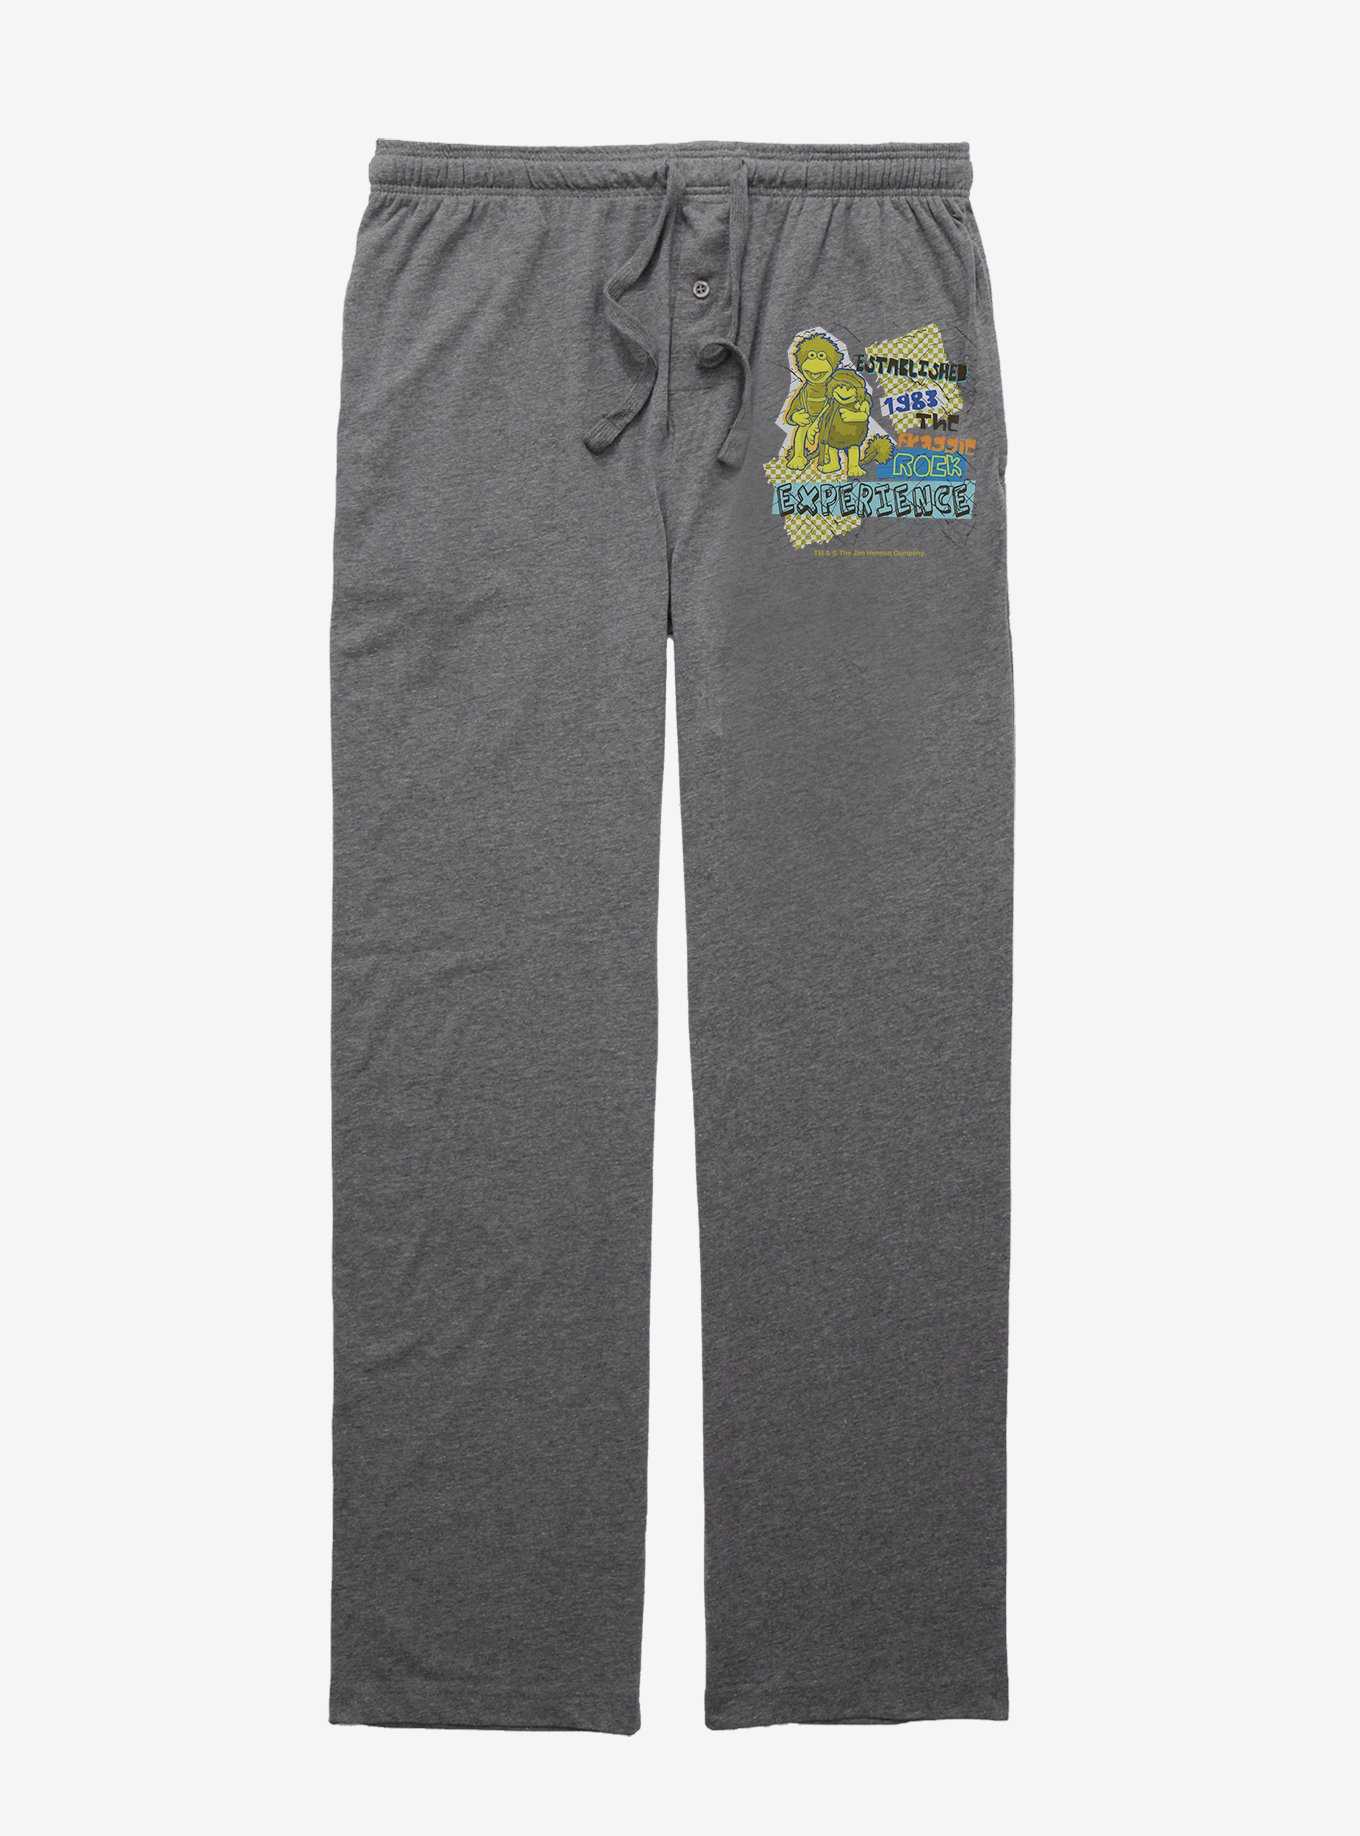 Jim Henson's Fraggle Rock Expierence Pajama Pants, , hi-res